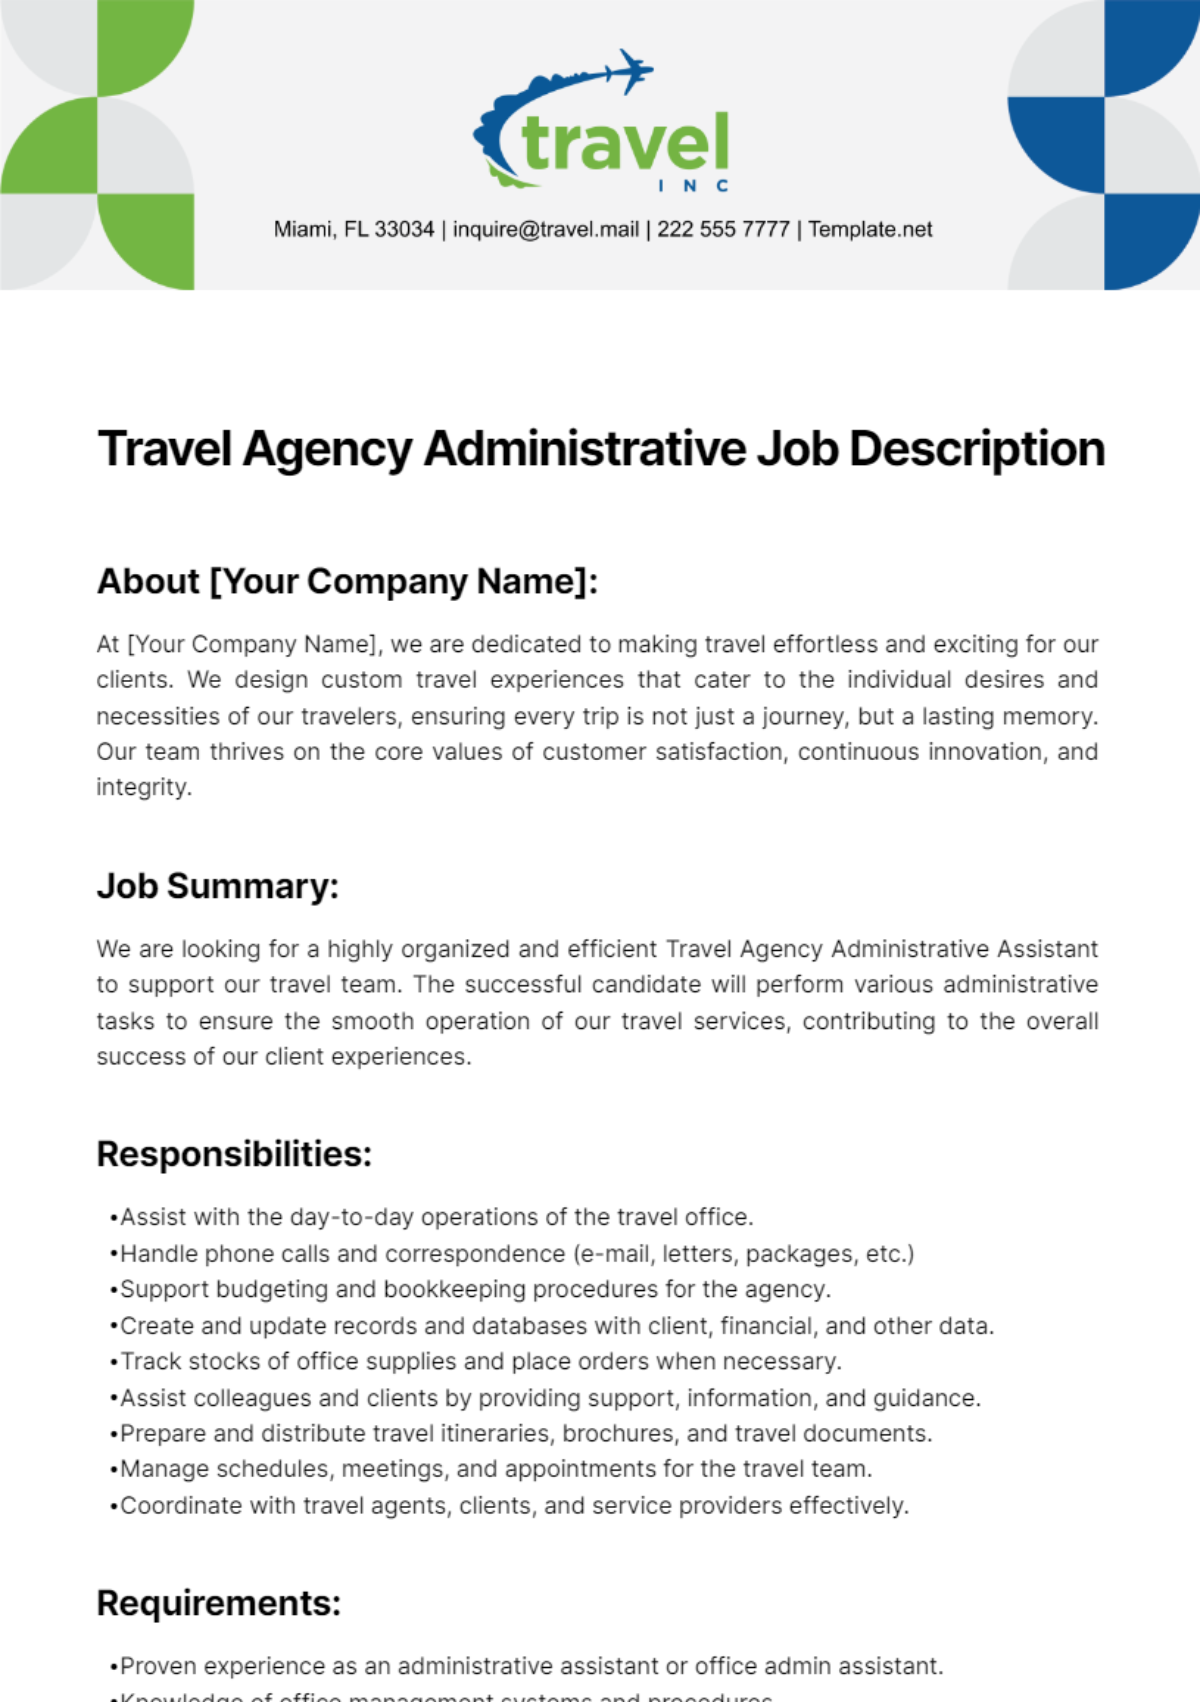 Travel Agency Administrative Job Description Template